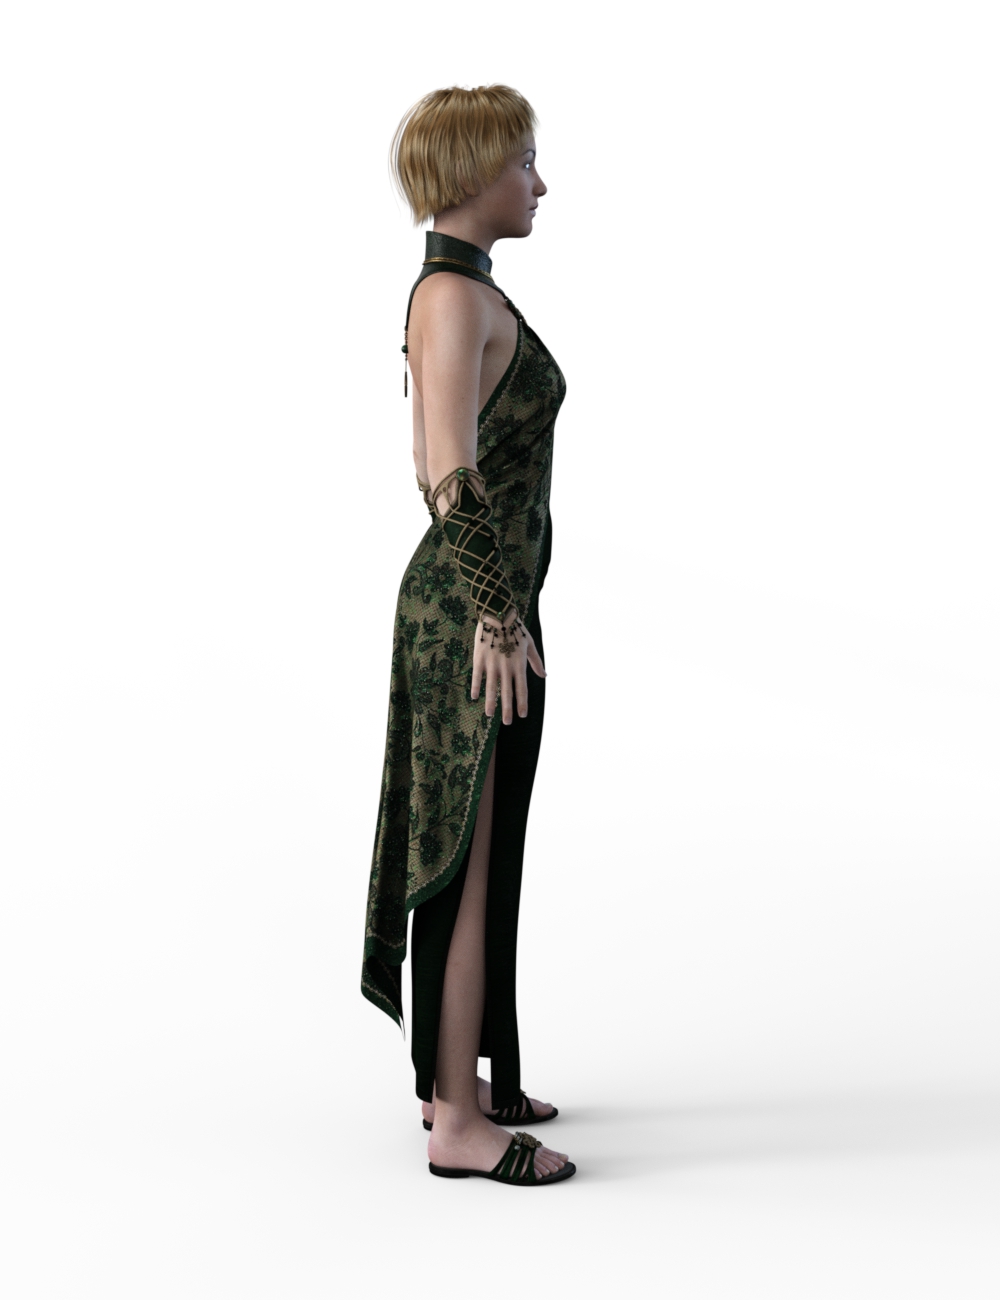 FBX- Lynsey Asian Evening Wear by: Paleo, 3D Models by Daz 3D